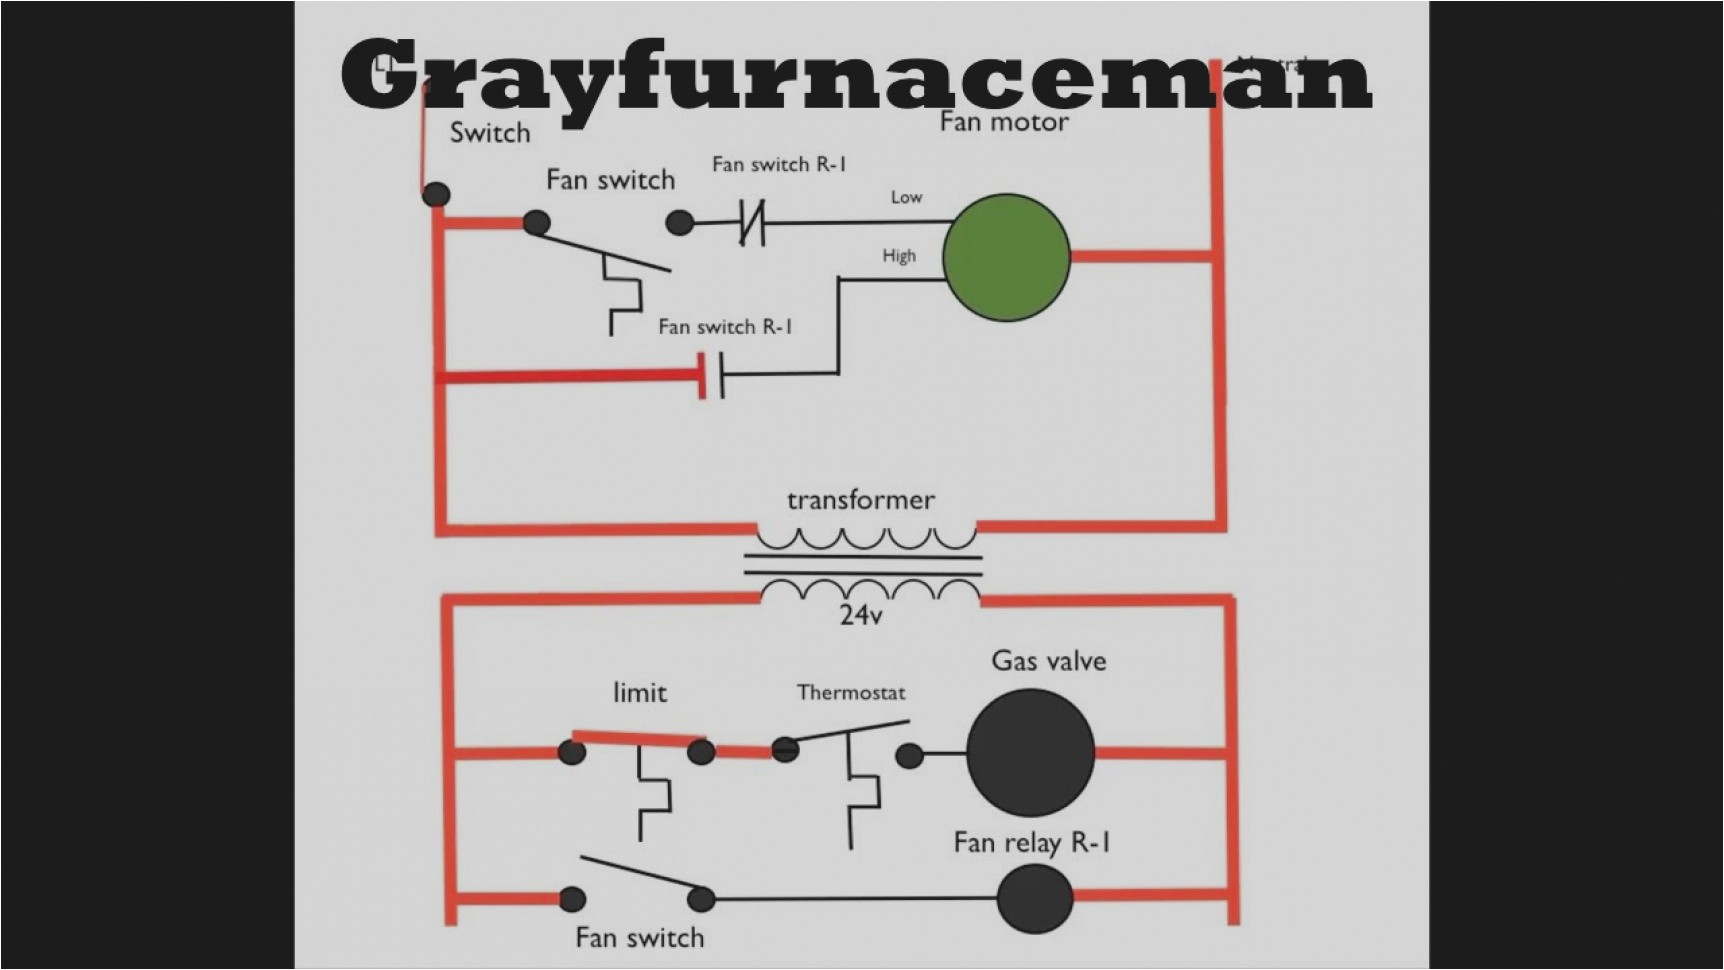 Grayfurnaceman